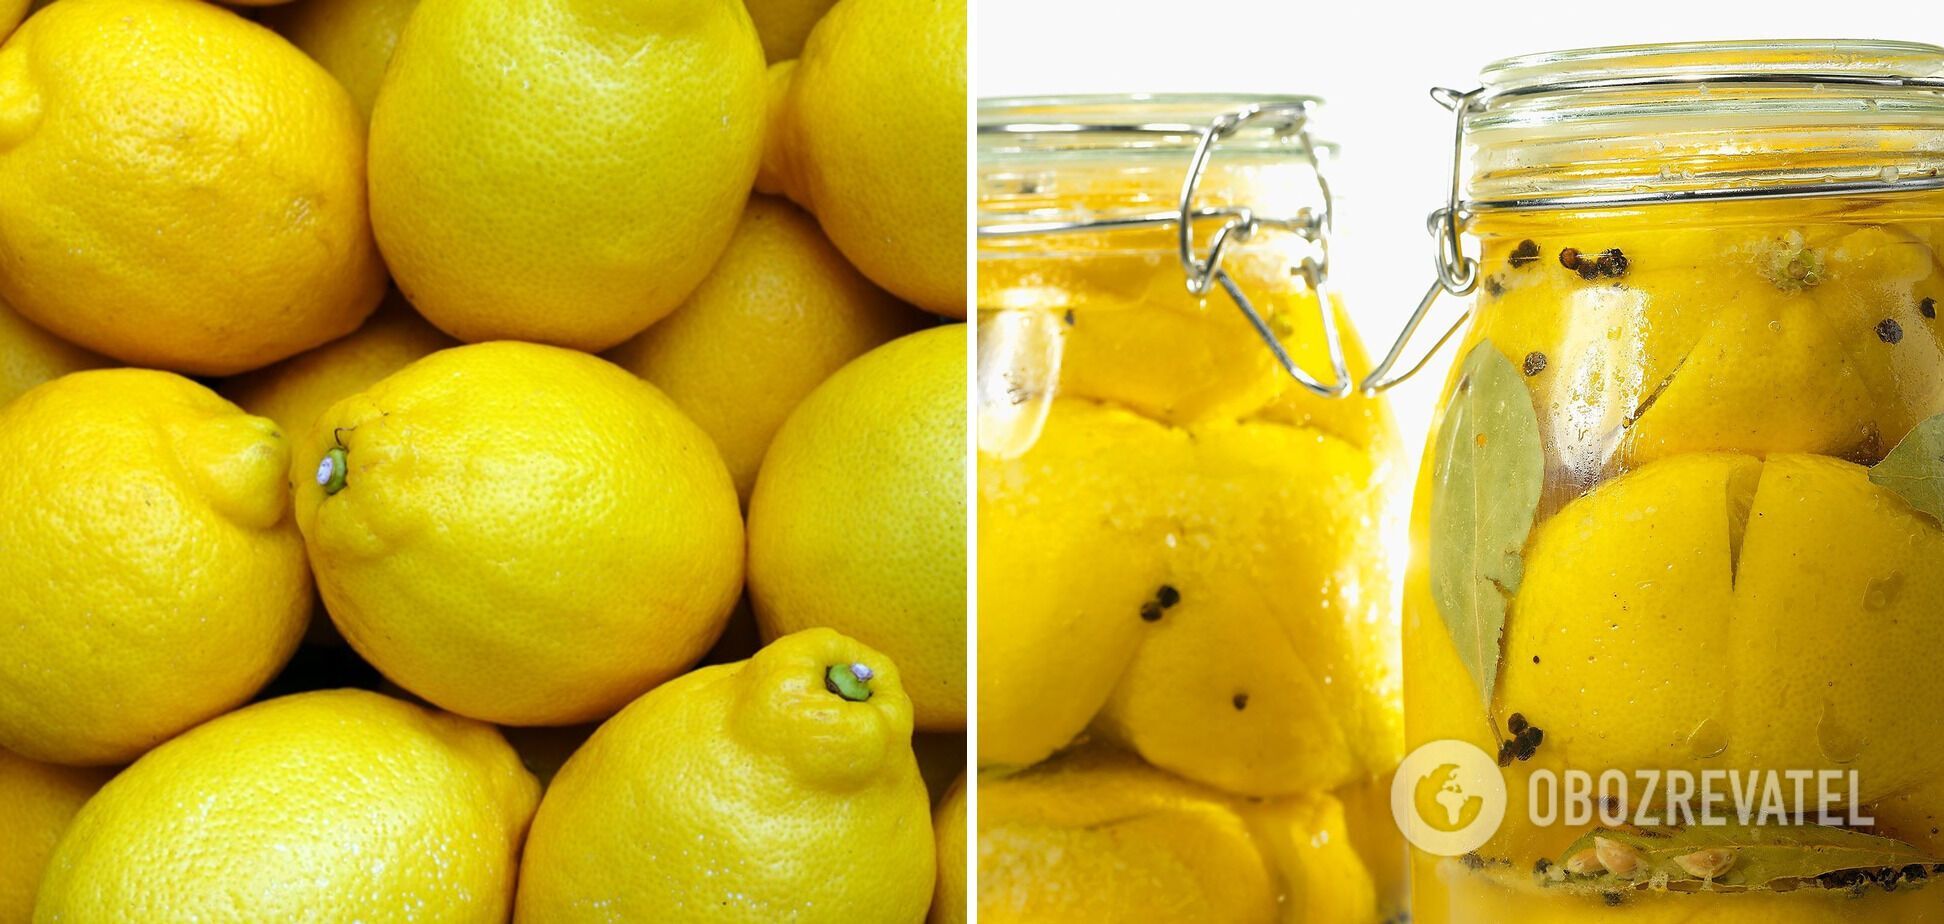 How to store lemon to preserve vitamins